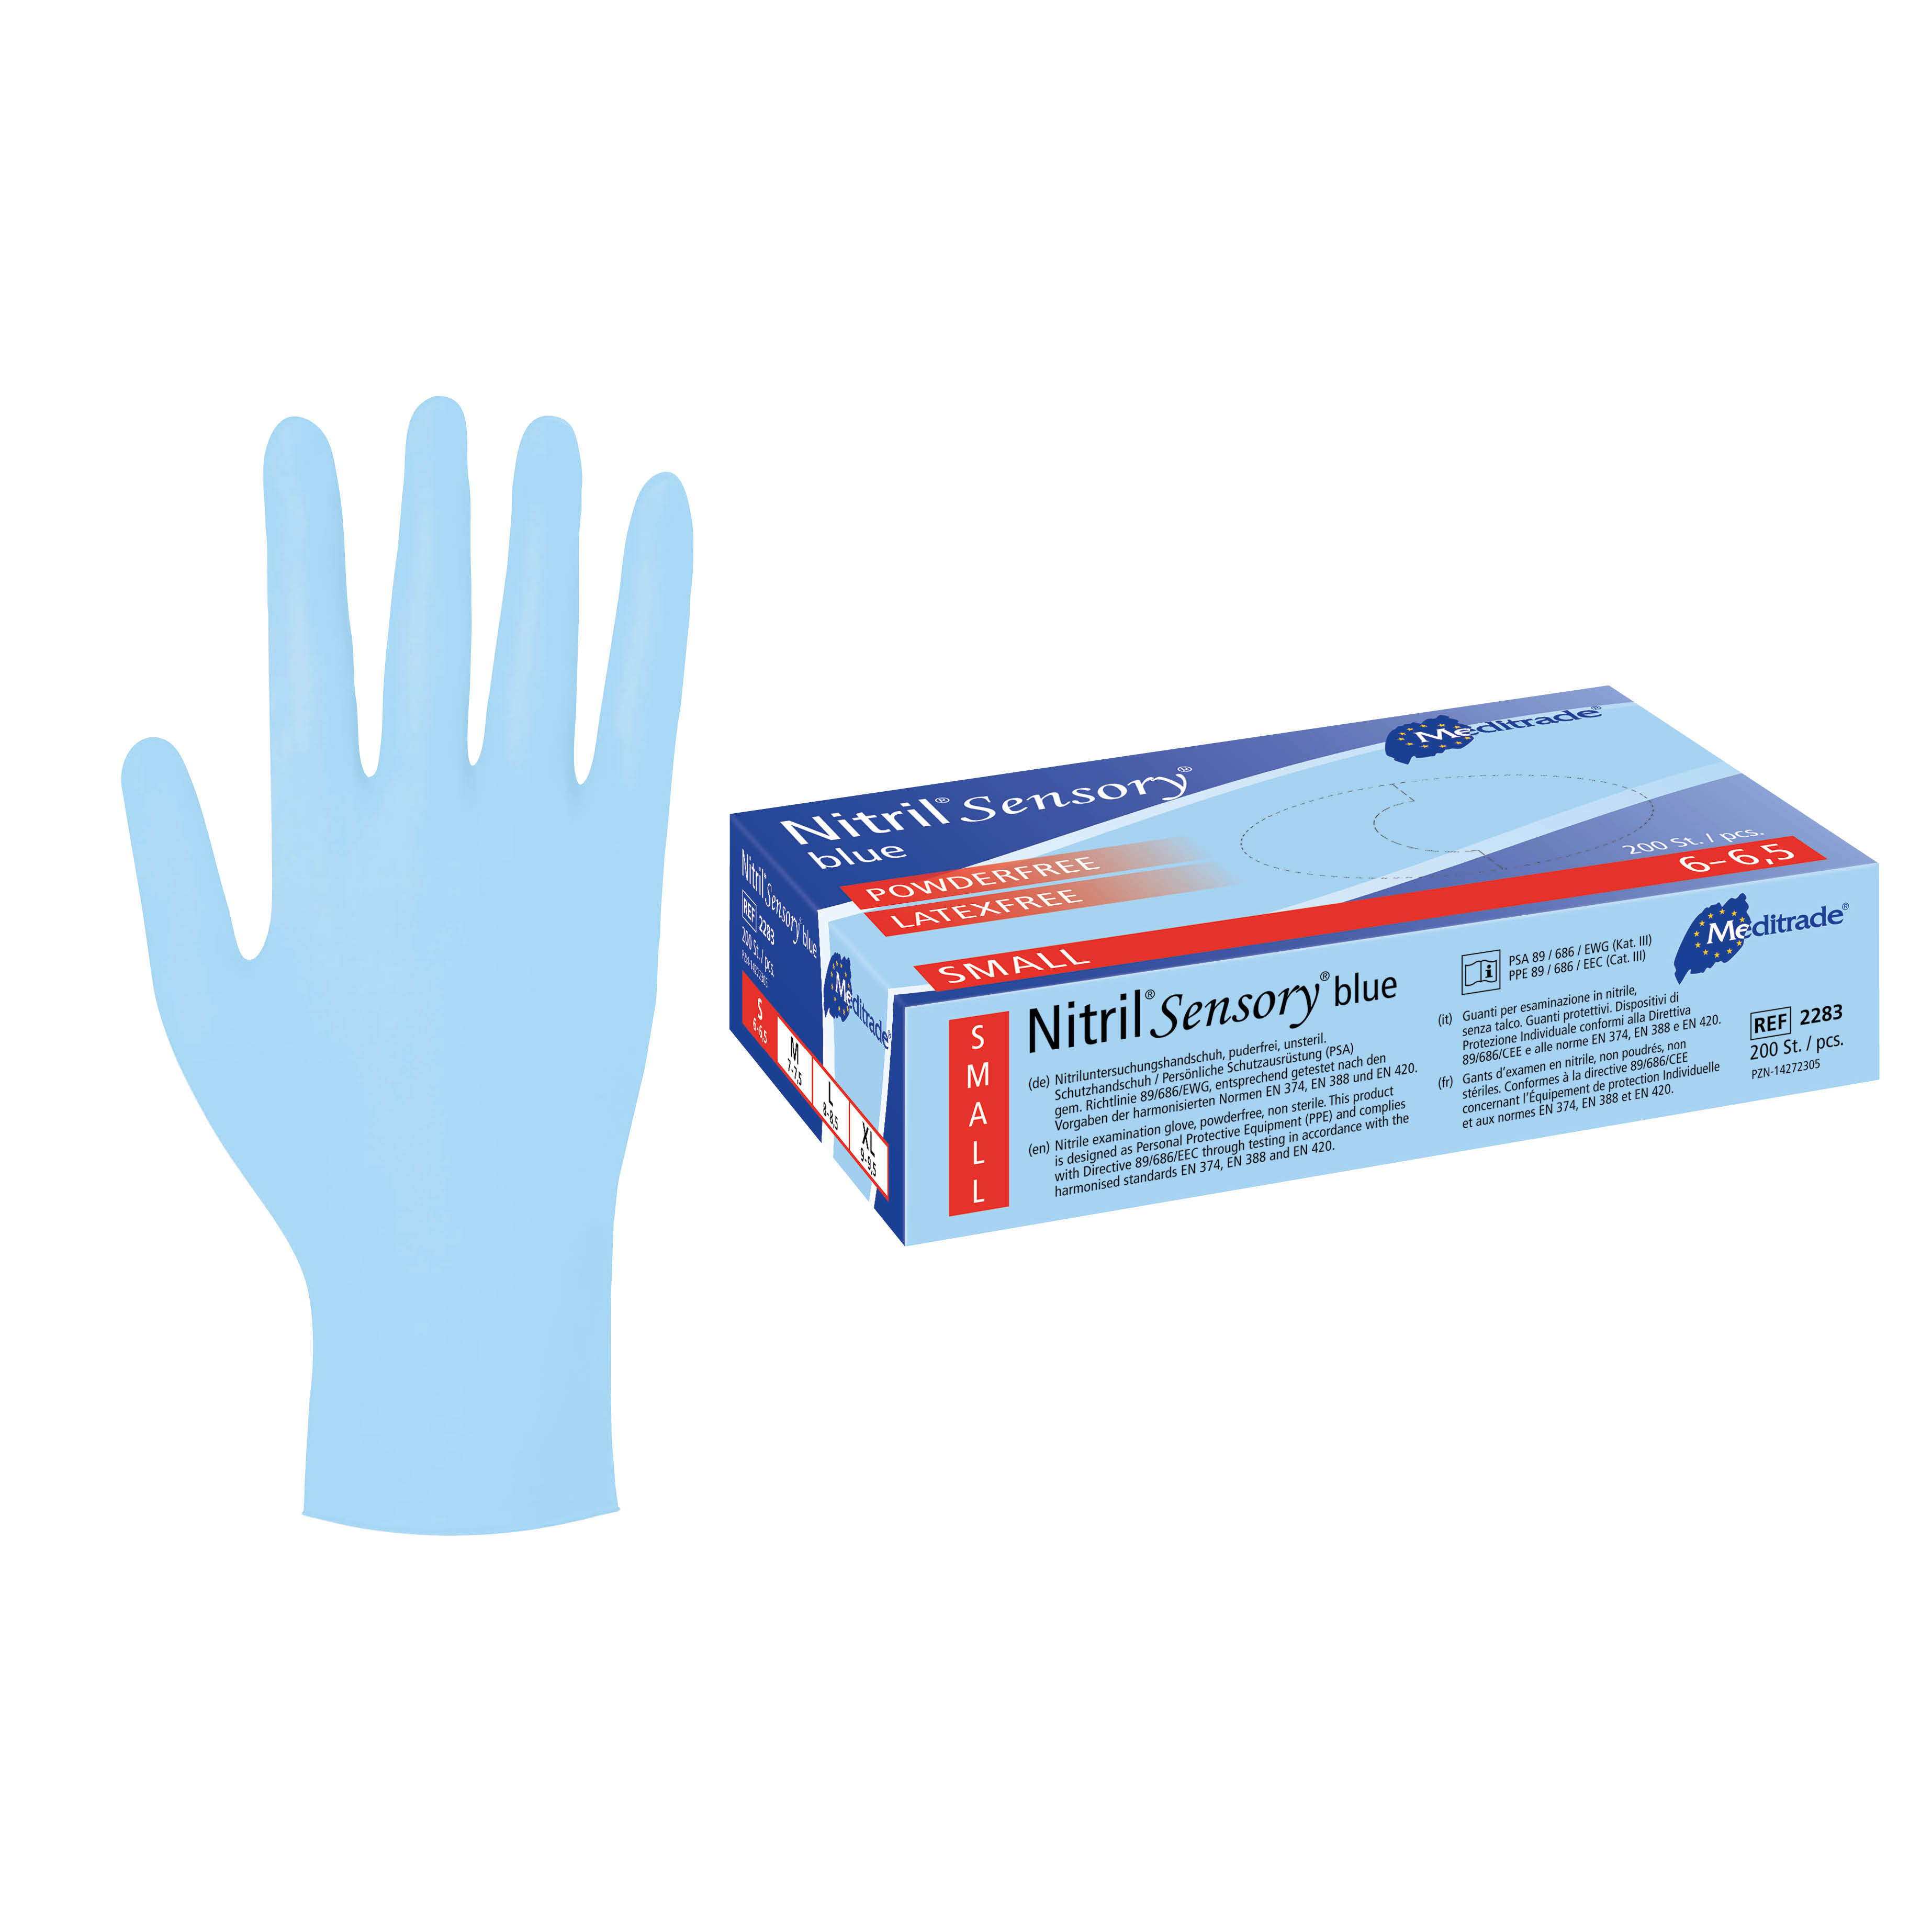 Meditrade Nitril® Sensory® Blau XS - 200 Stück pro Pack